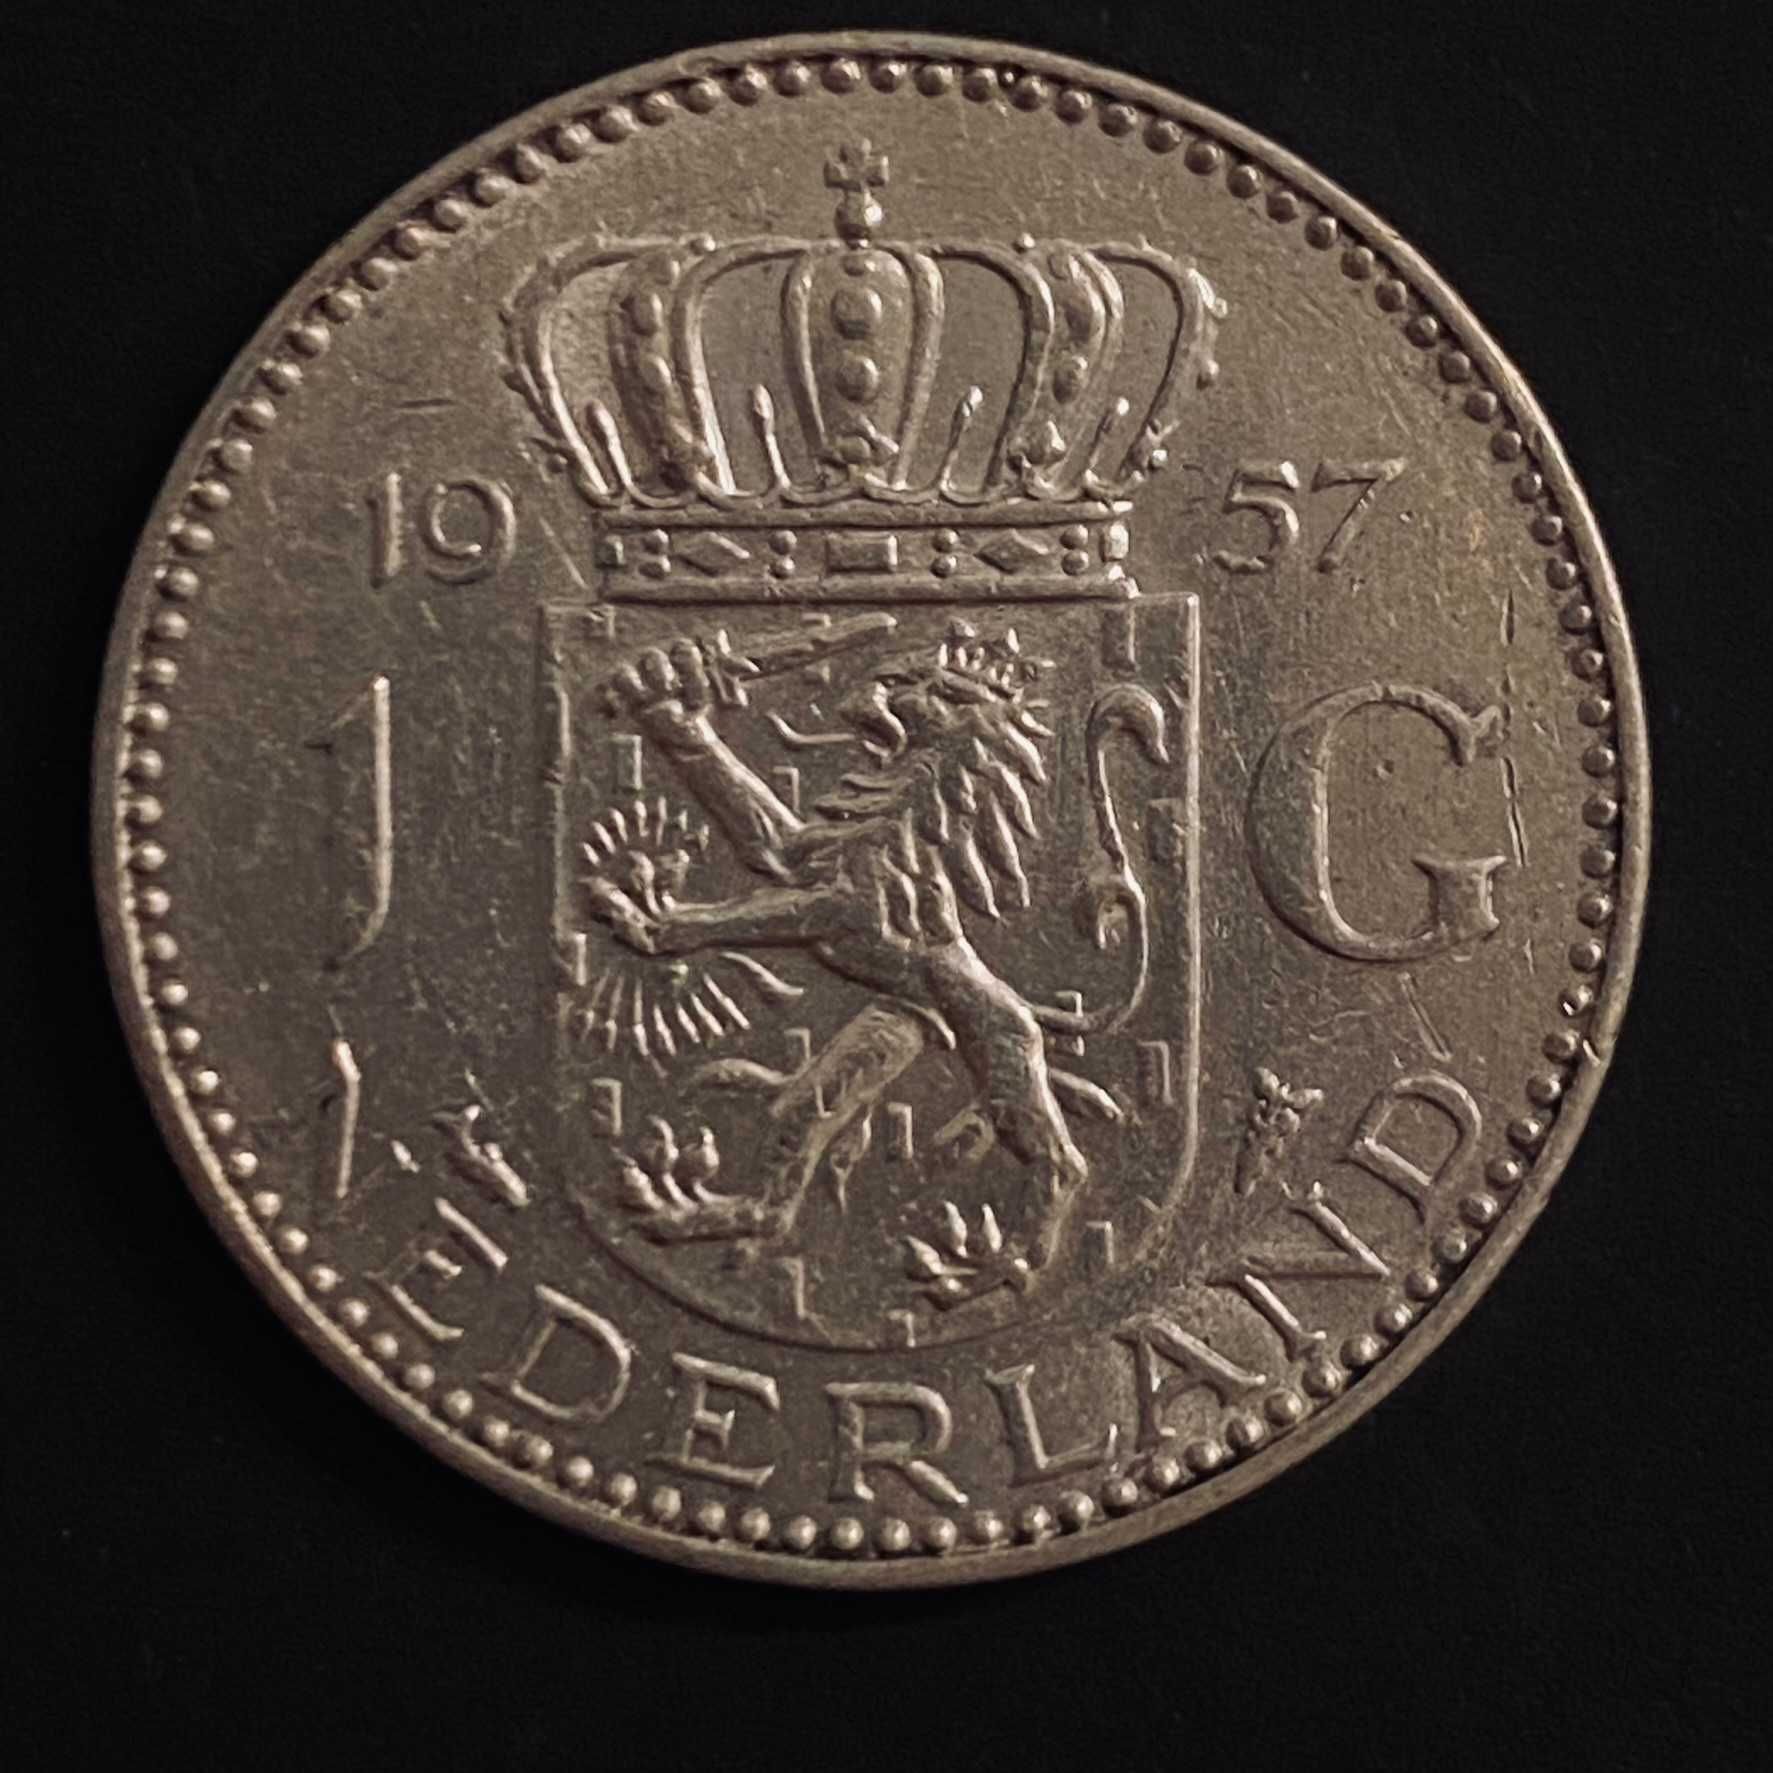 HOLANDIA, 1 gulden, rok 1957, Ag 0,720